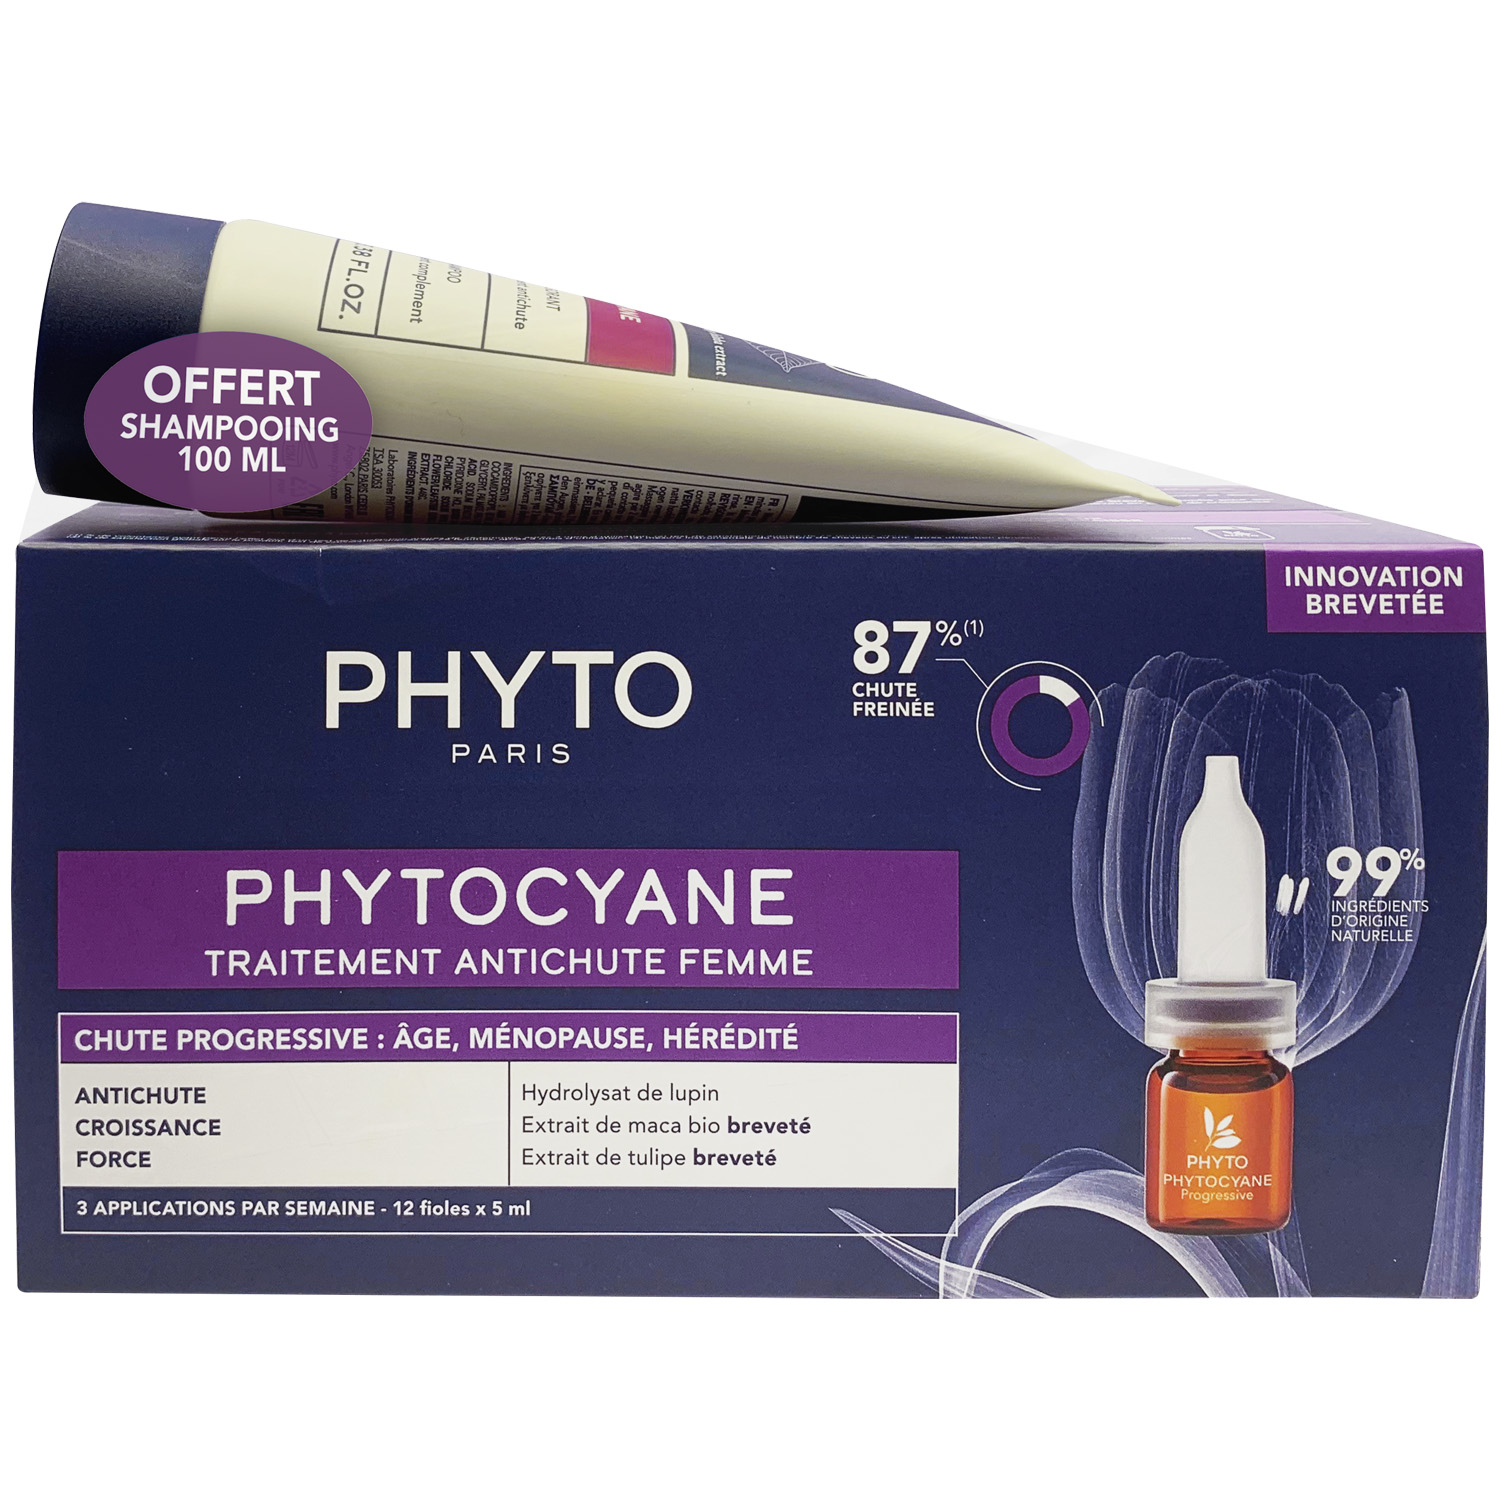 Phyto Набор для женщин: сыворотка от выпадения волос 12х 5мл + укрепляющий шампунь 100 мл (Phyto, Phytocyane) сыворотка phyto против выпадения волос для женщин 12 ампул х 5 мл